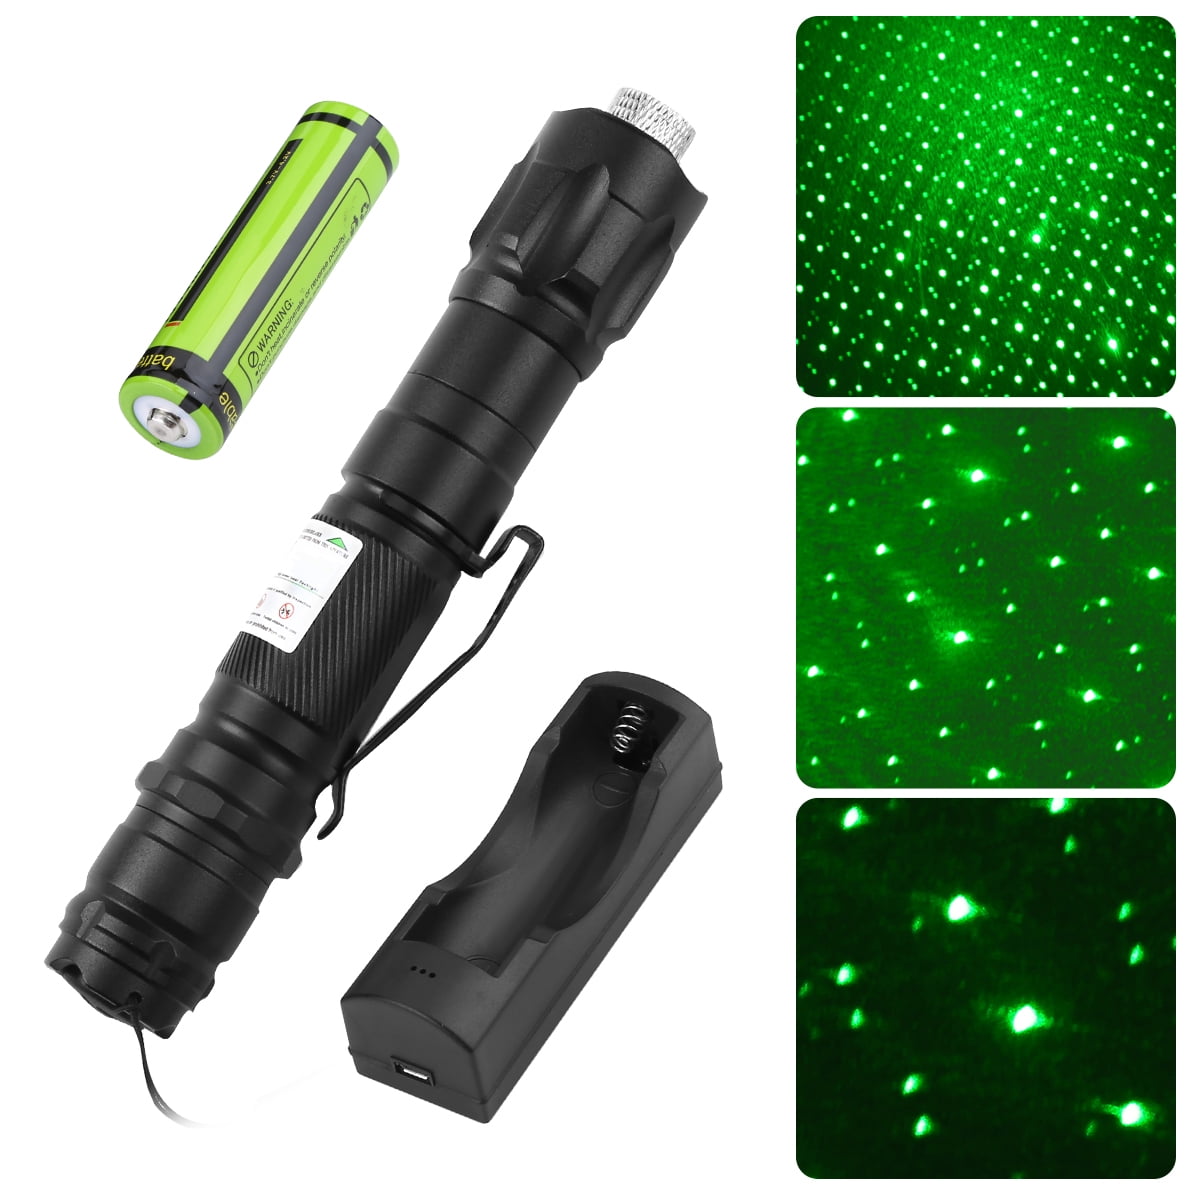 10 Miles Military Green 1mW 532nm 850 Laser Pointer Pen Light Visible Beam Lazer